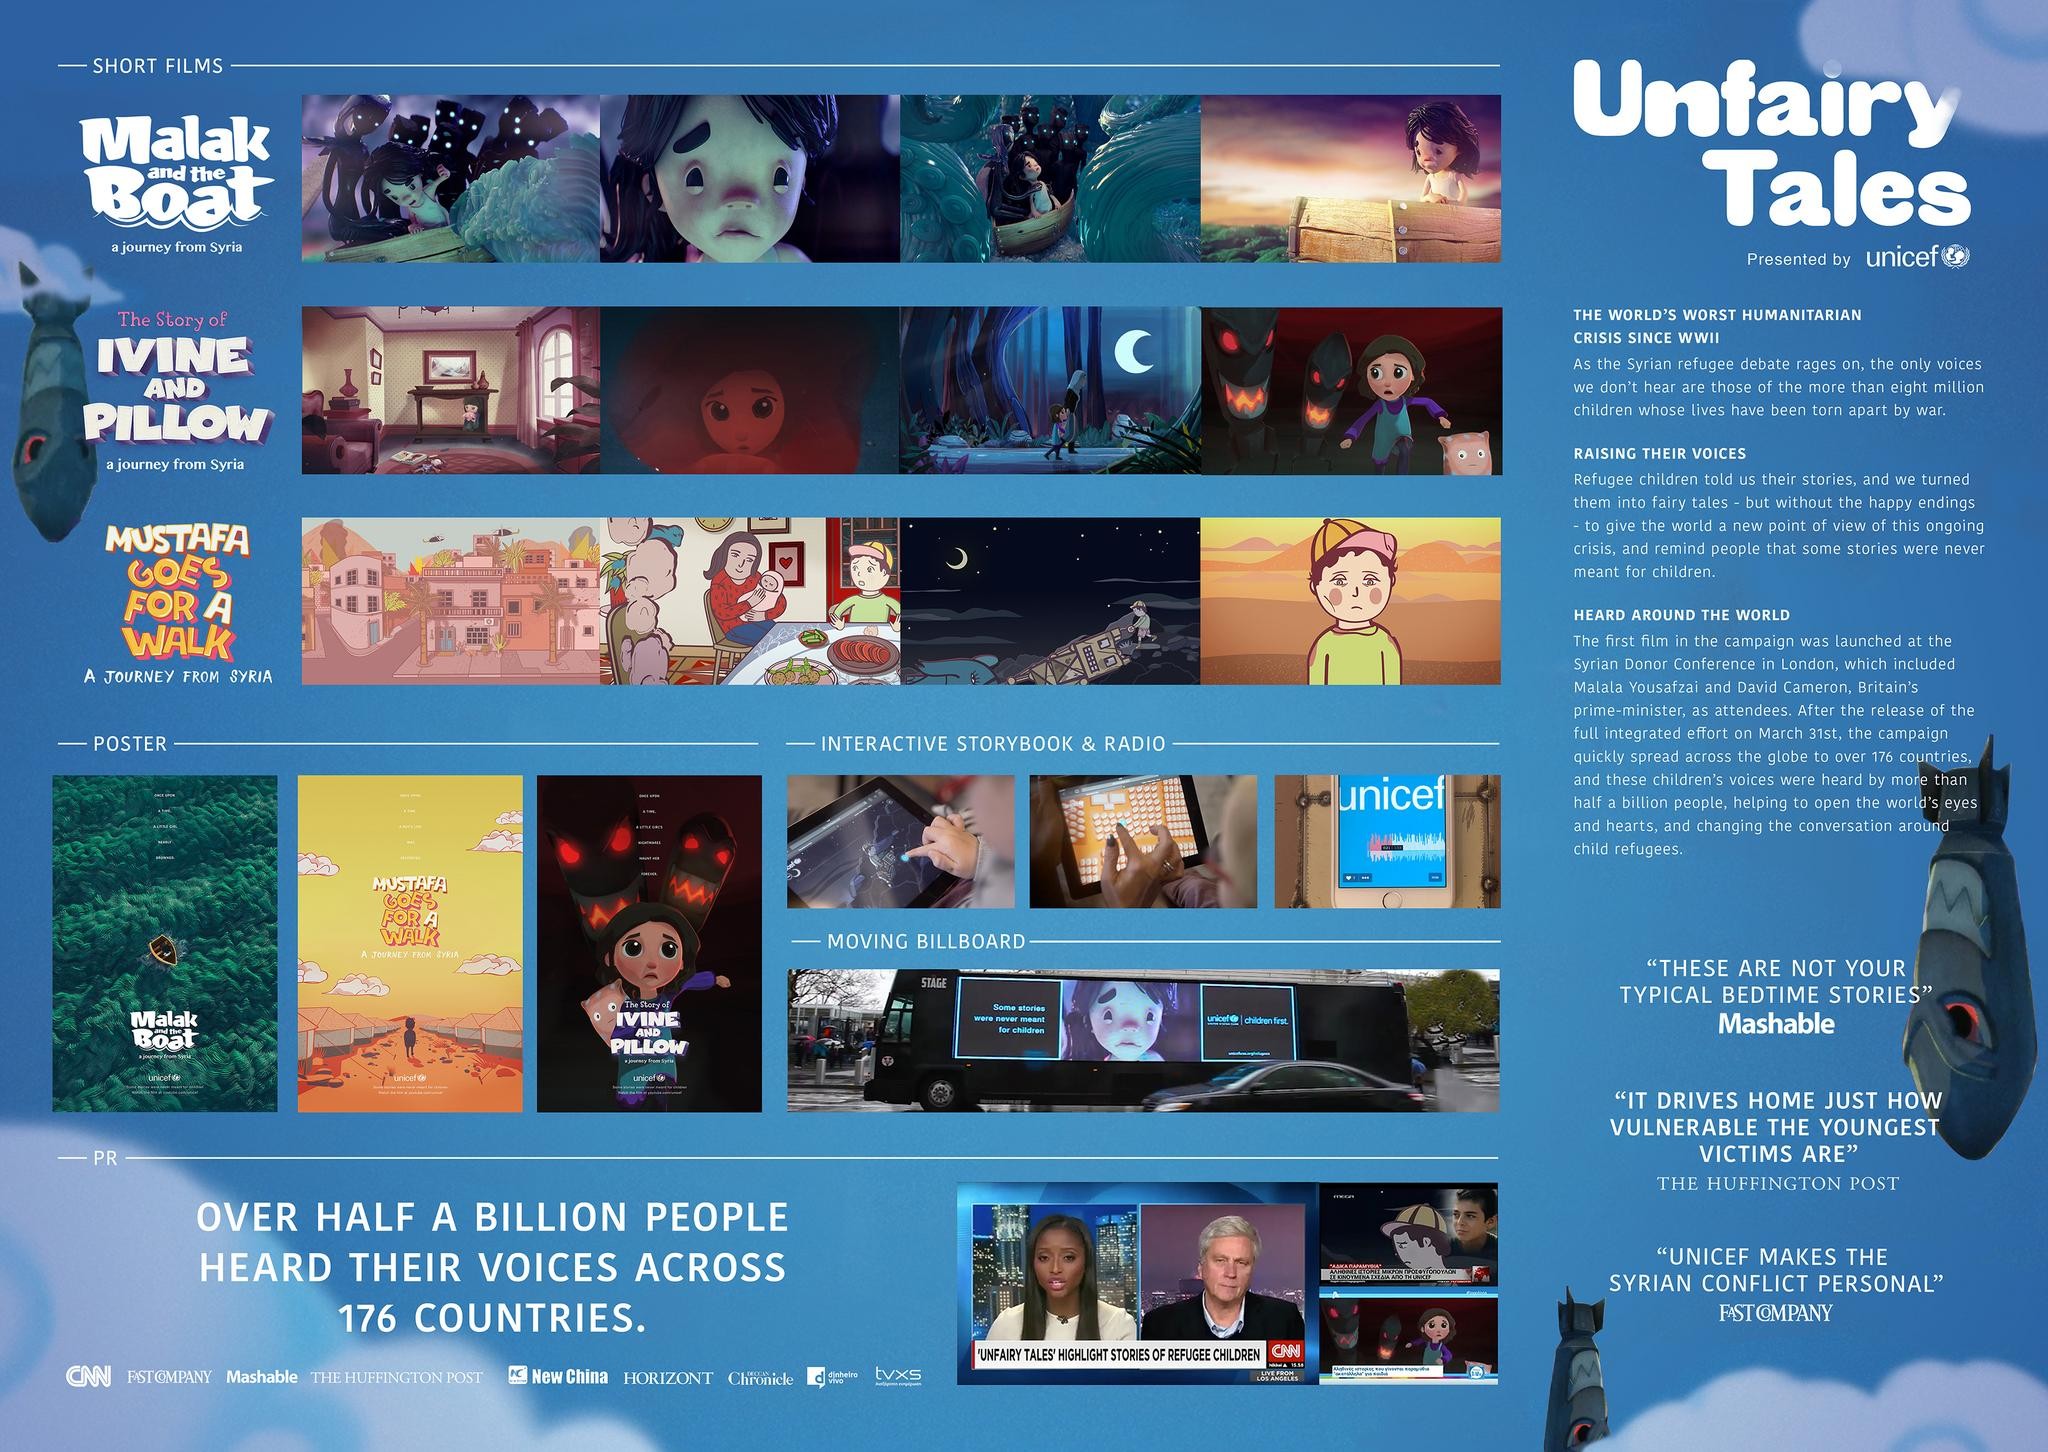 Unicef: Unfairy Tales